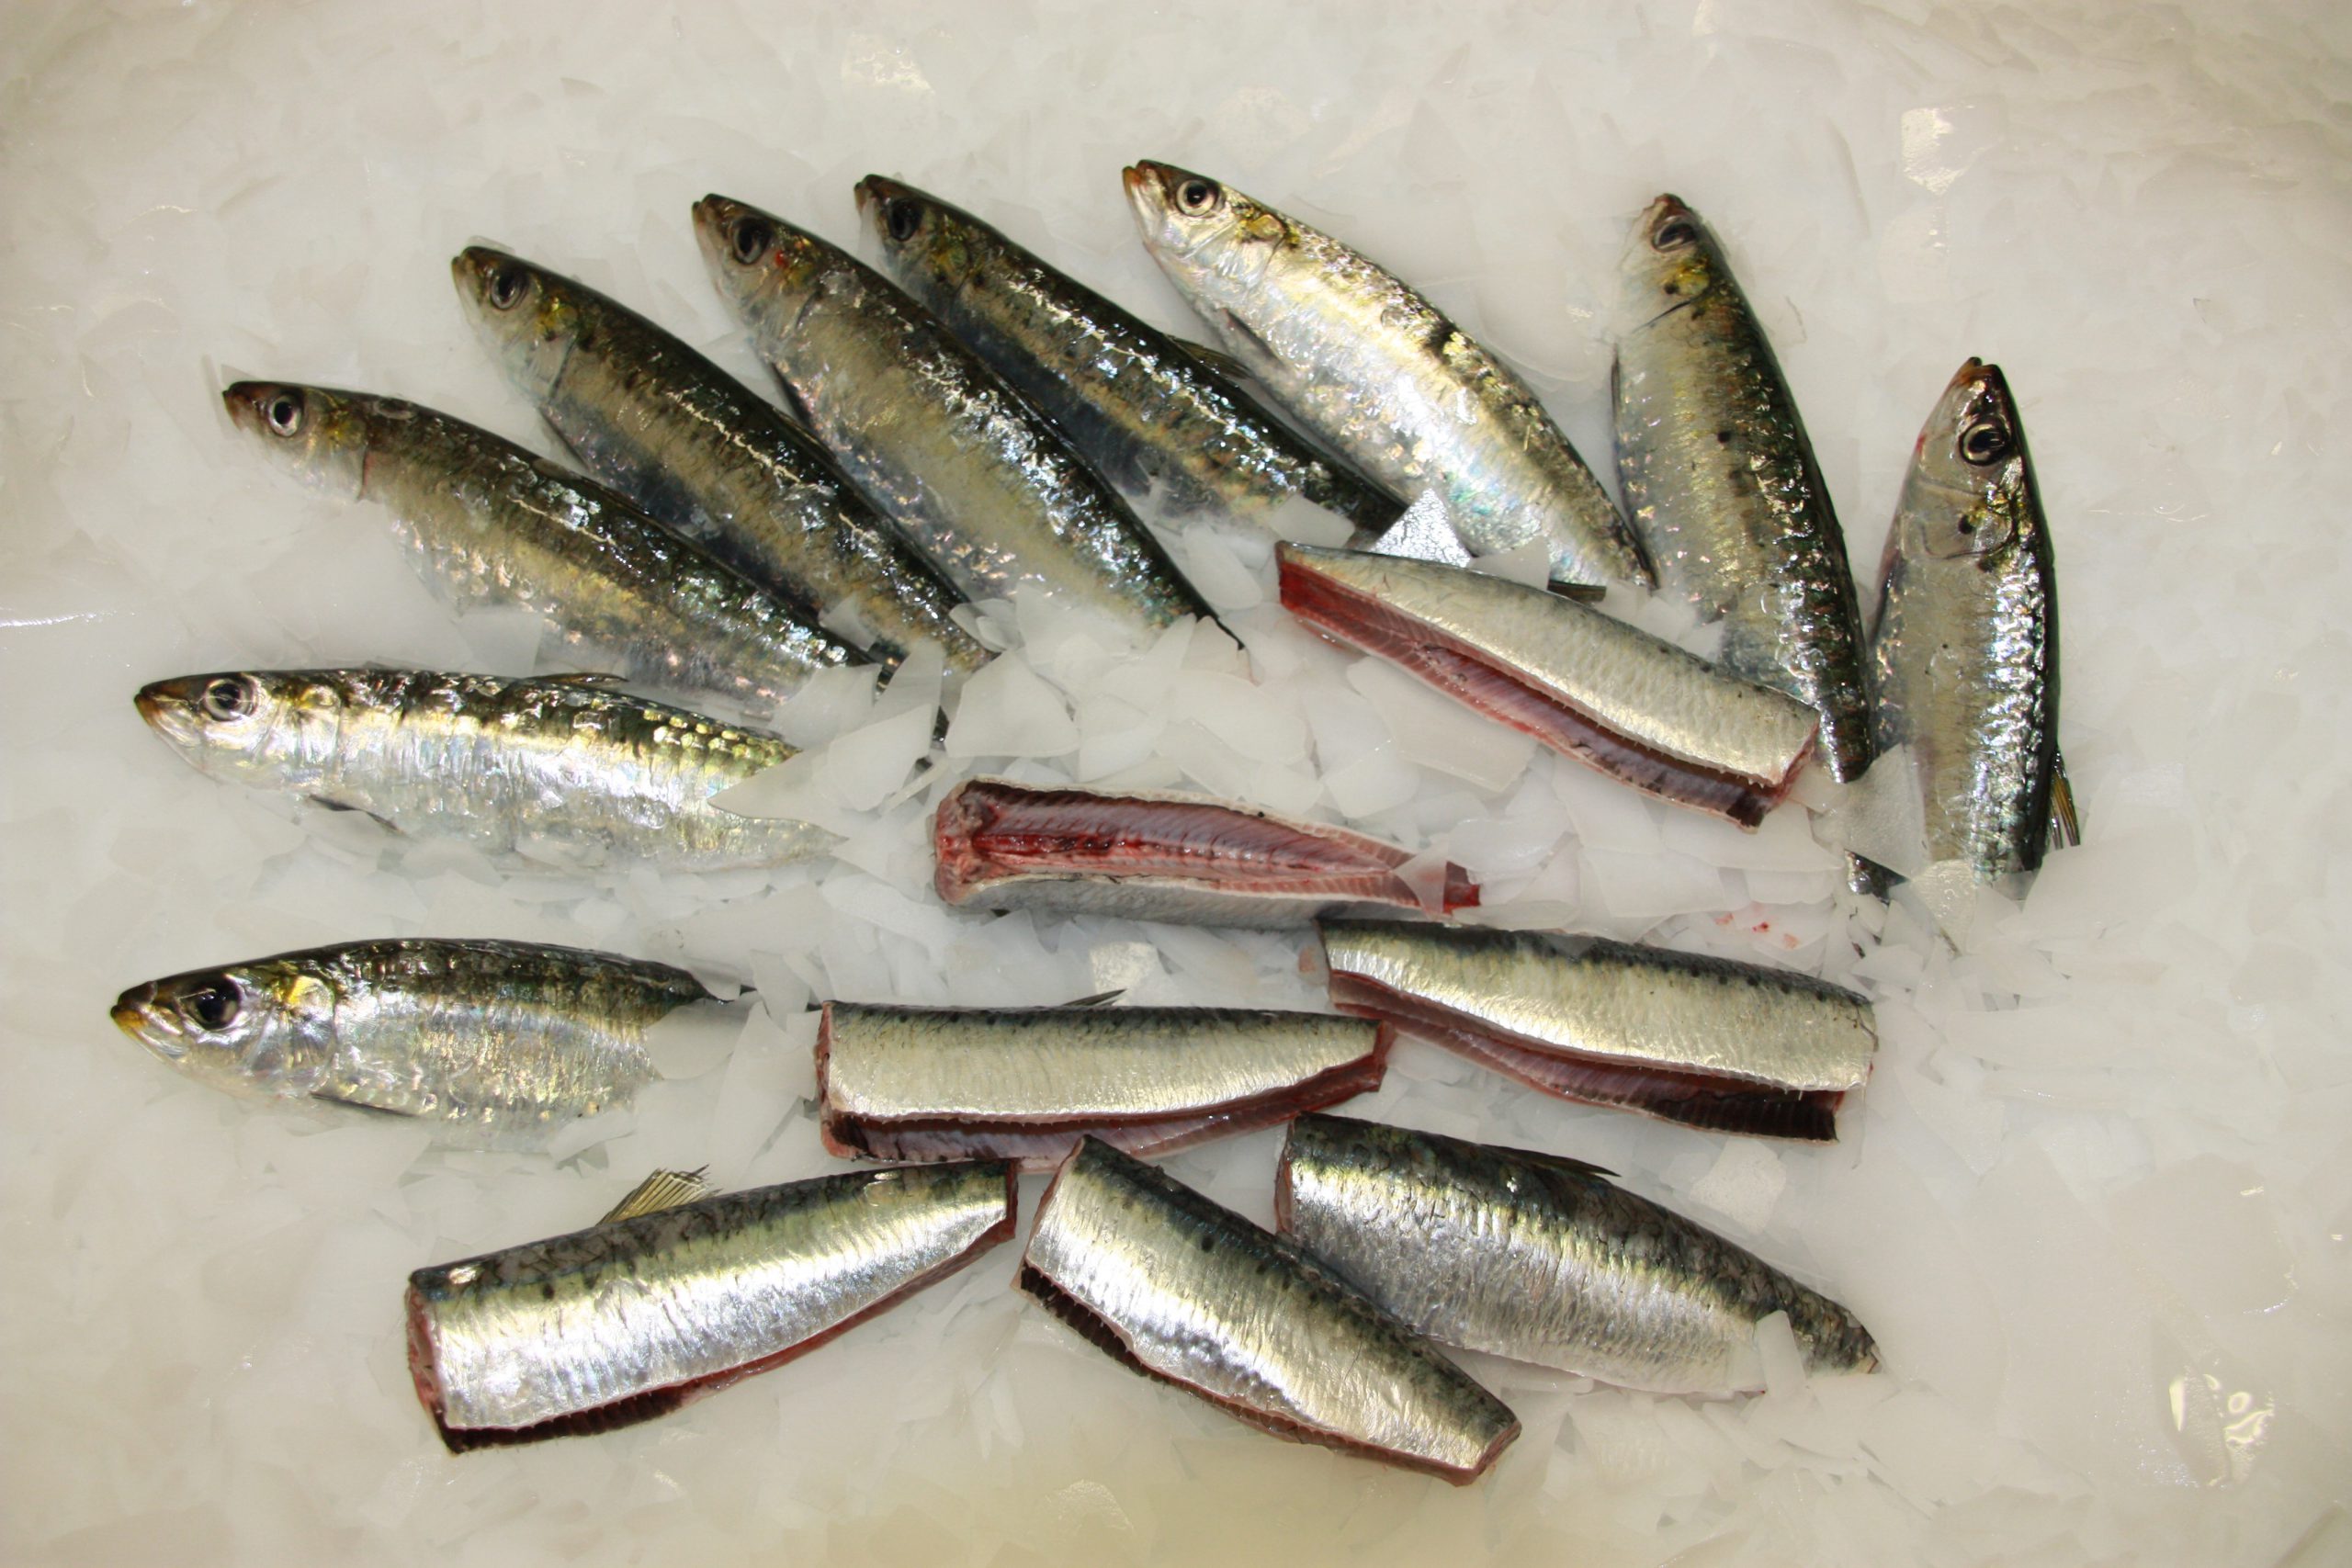 Filet de sardine